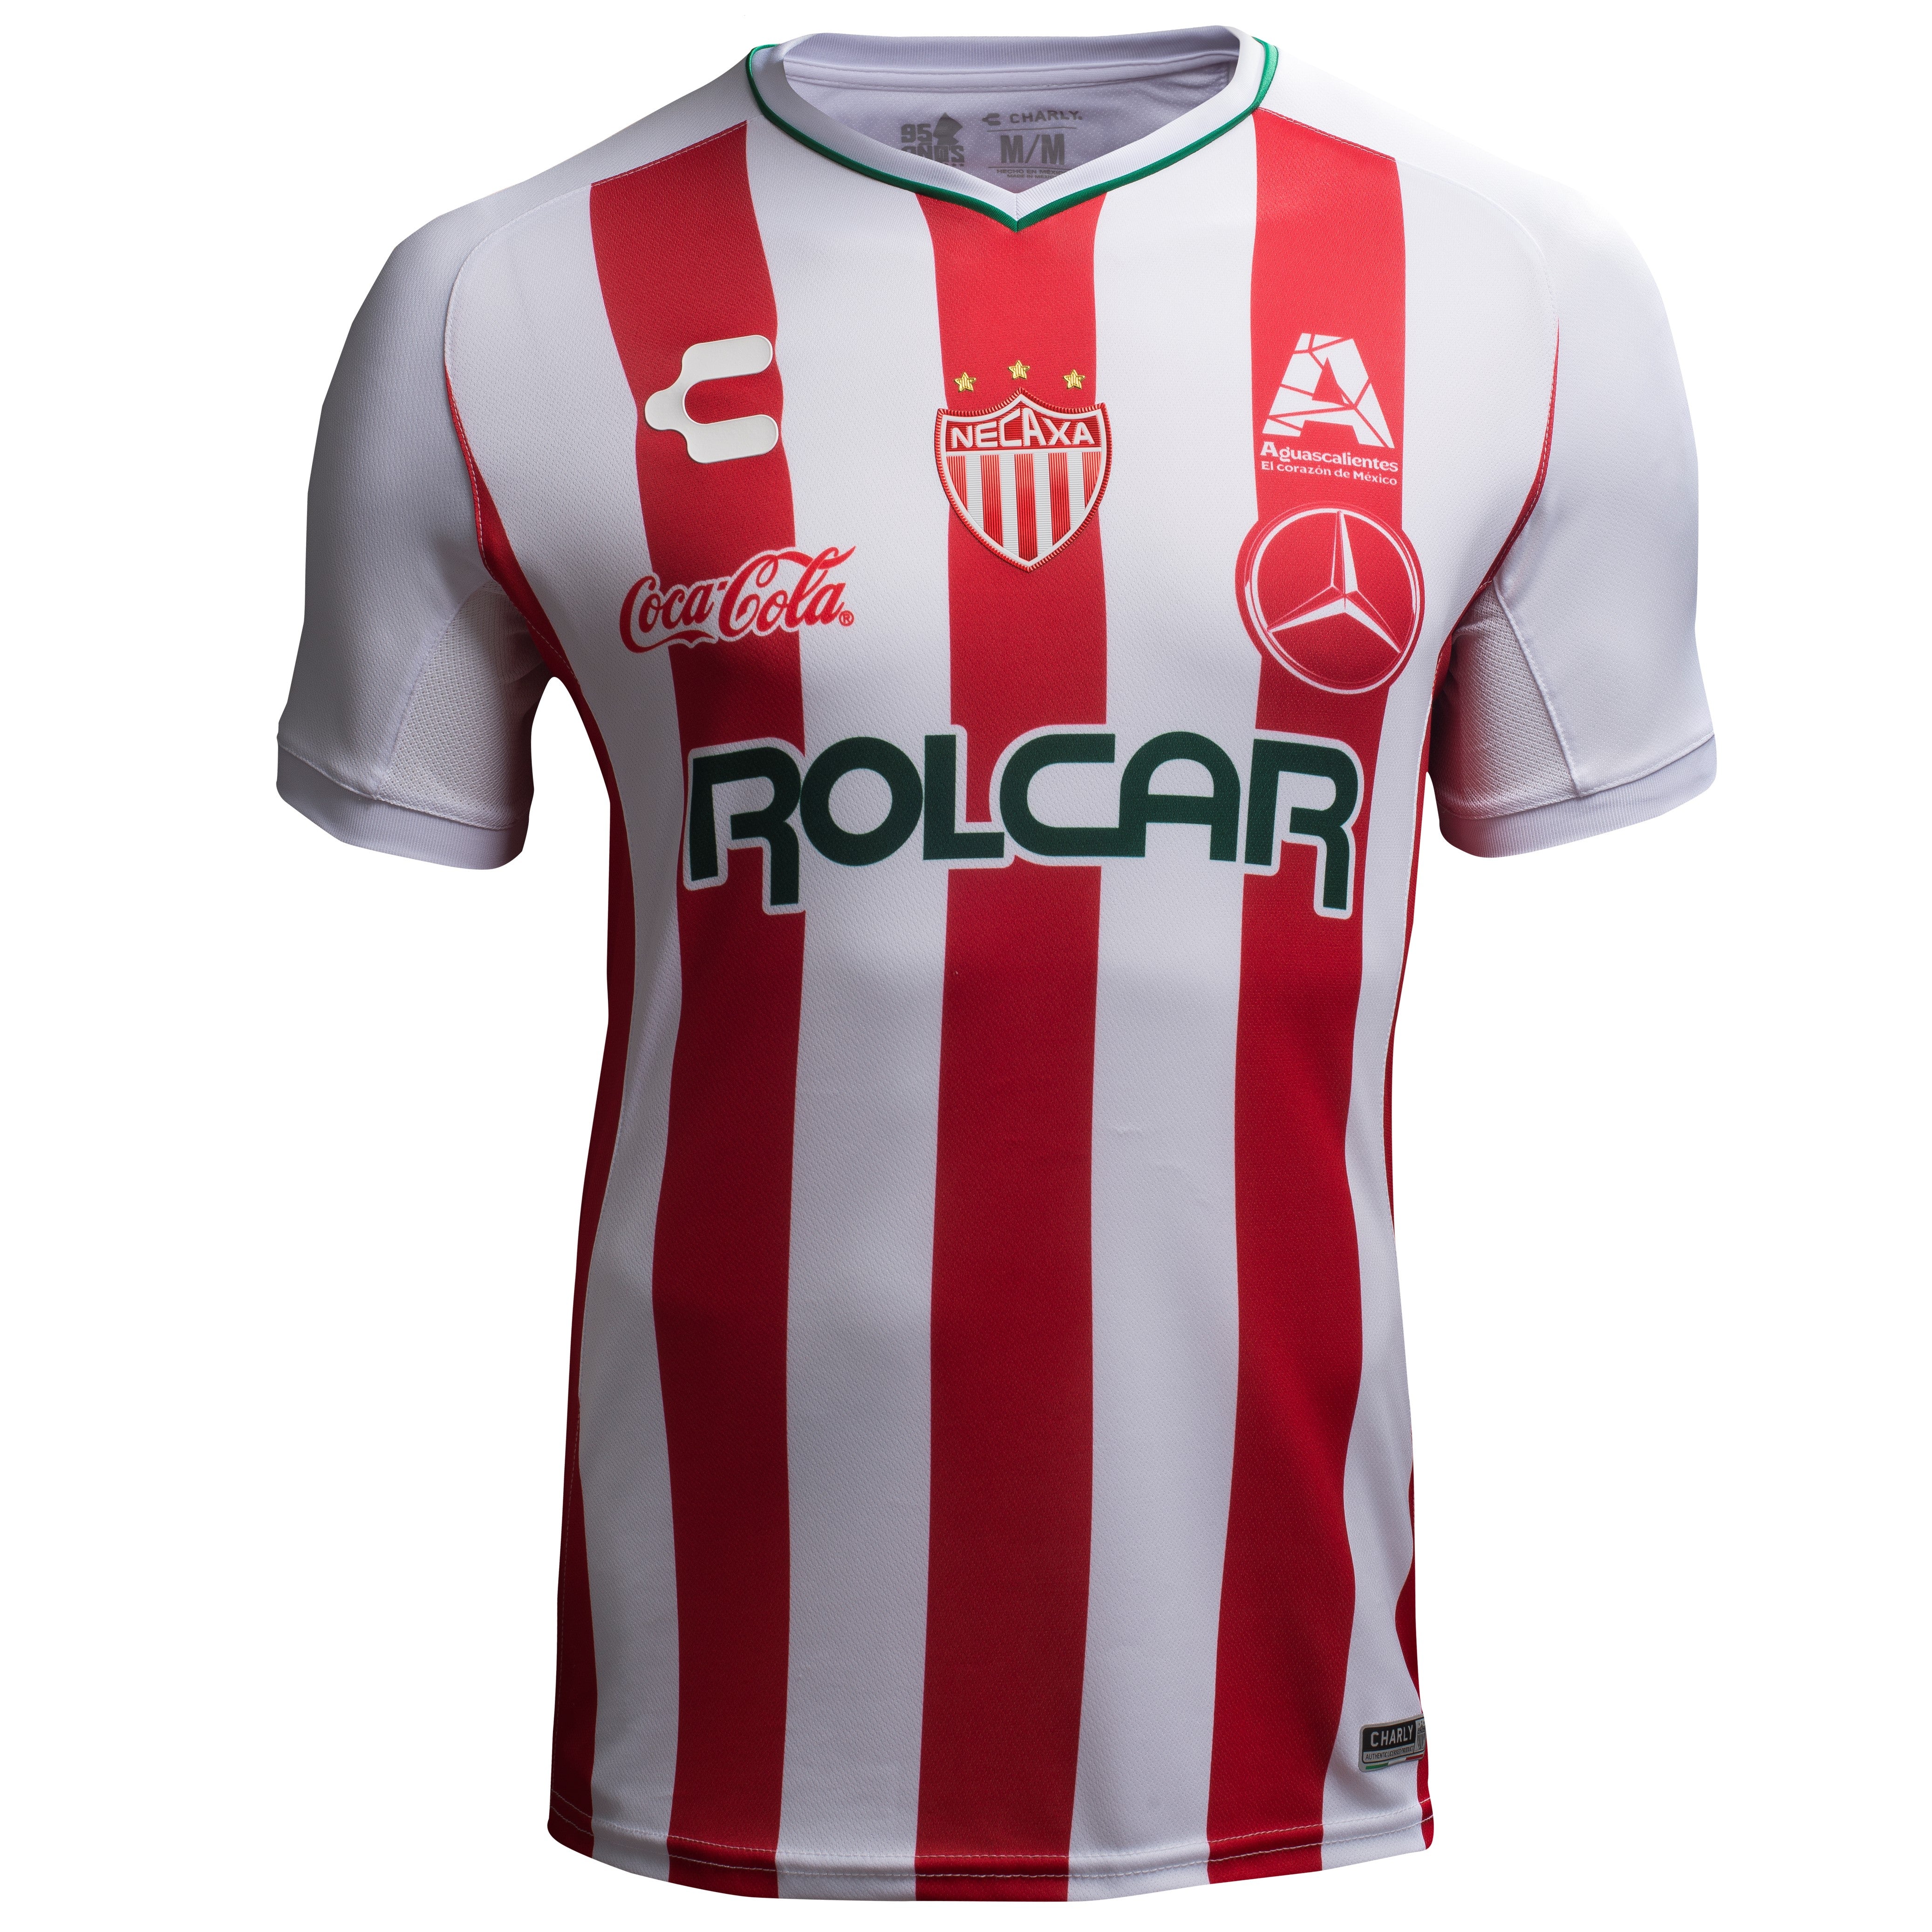 Club América (MEX) 2018-19 Home Jersey Concept